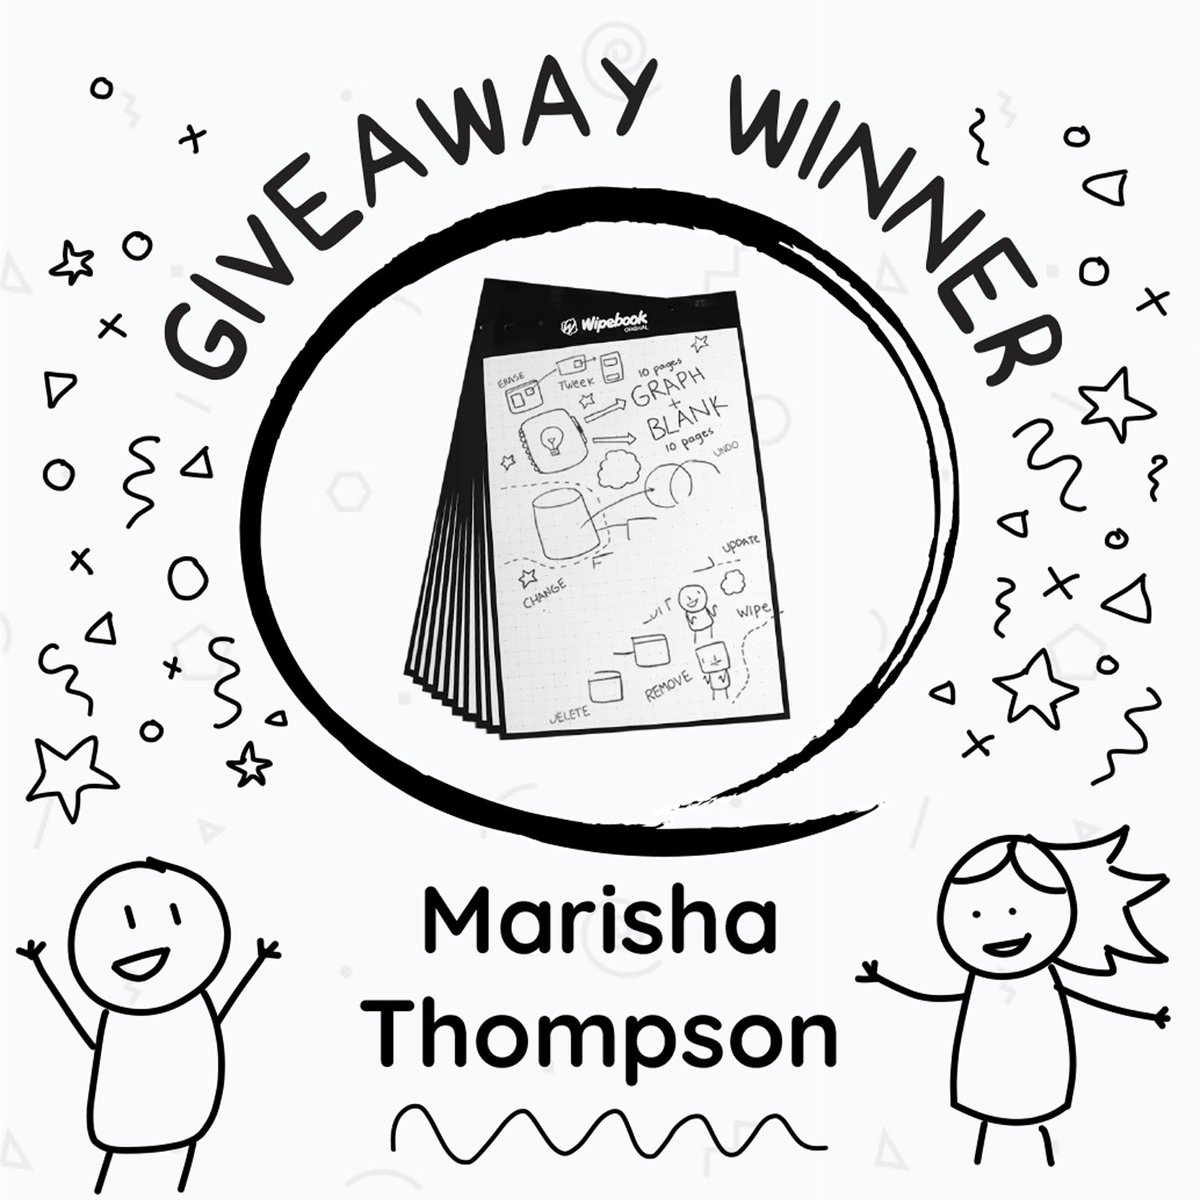 Congratulations to Marisha Thompson, our weekly Flipchart winner!🎉 Visit: wipebook.com/contest to enter the weekly giveaway. #flipchart #contest #giveaway #win